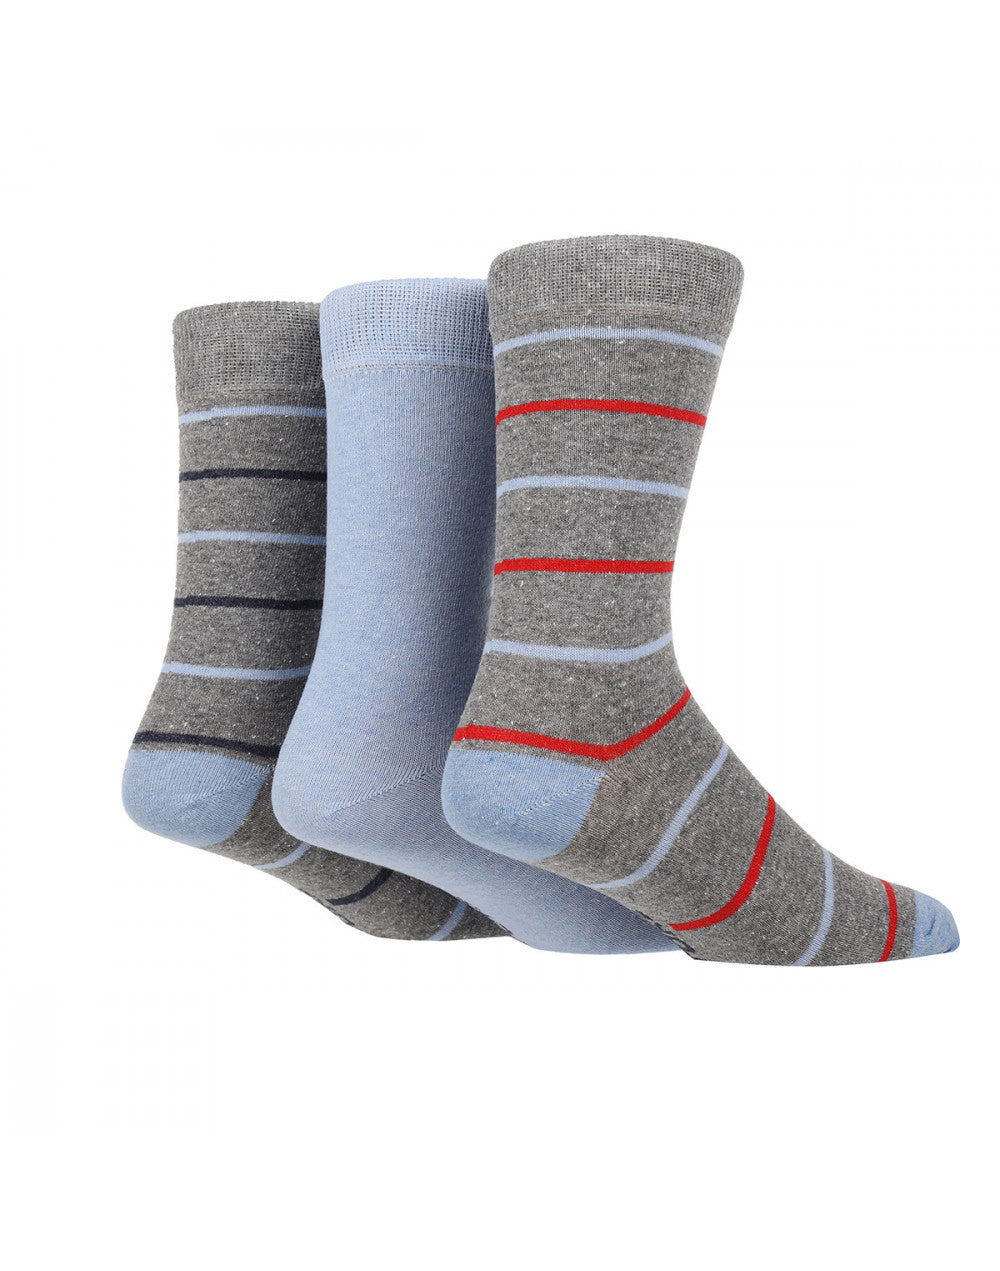 TORE 3Pk 100% Recycled Bold Fashion Stripe Socks- Men's